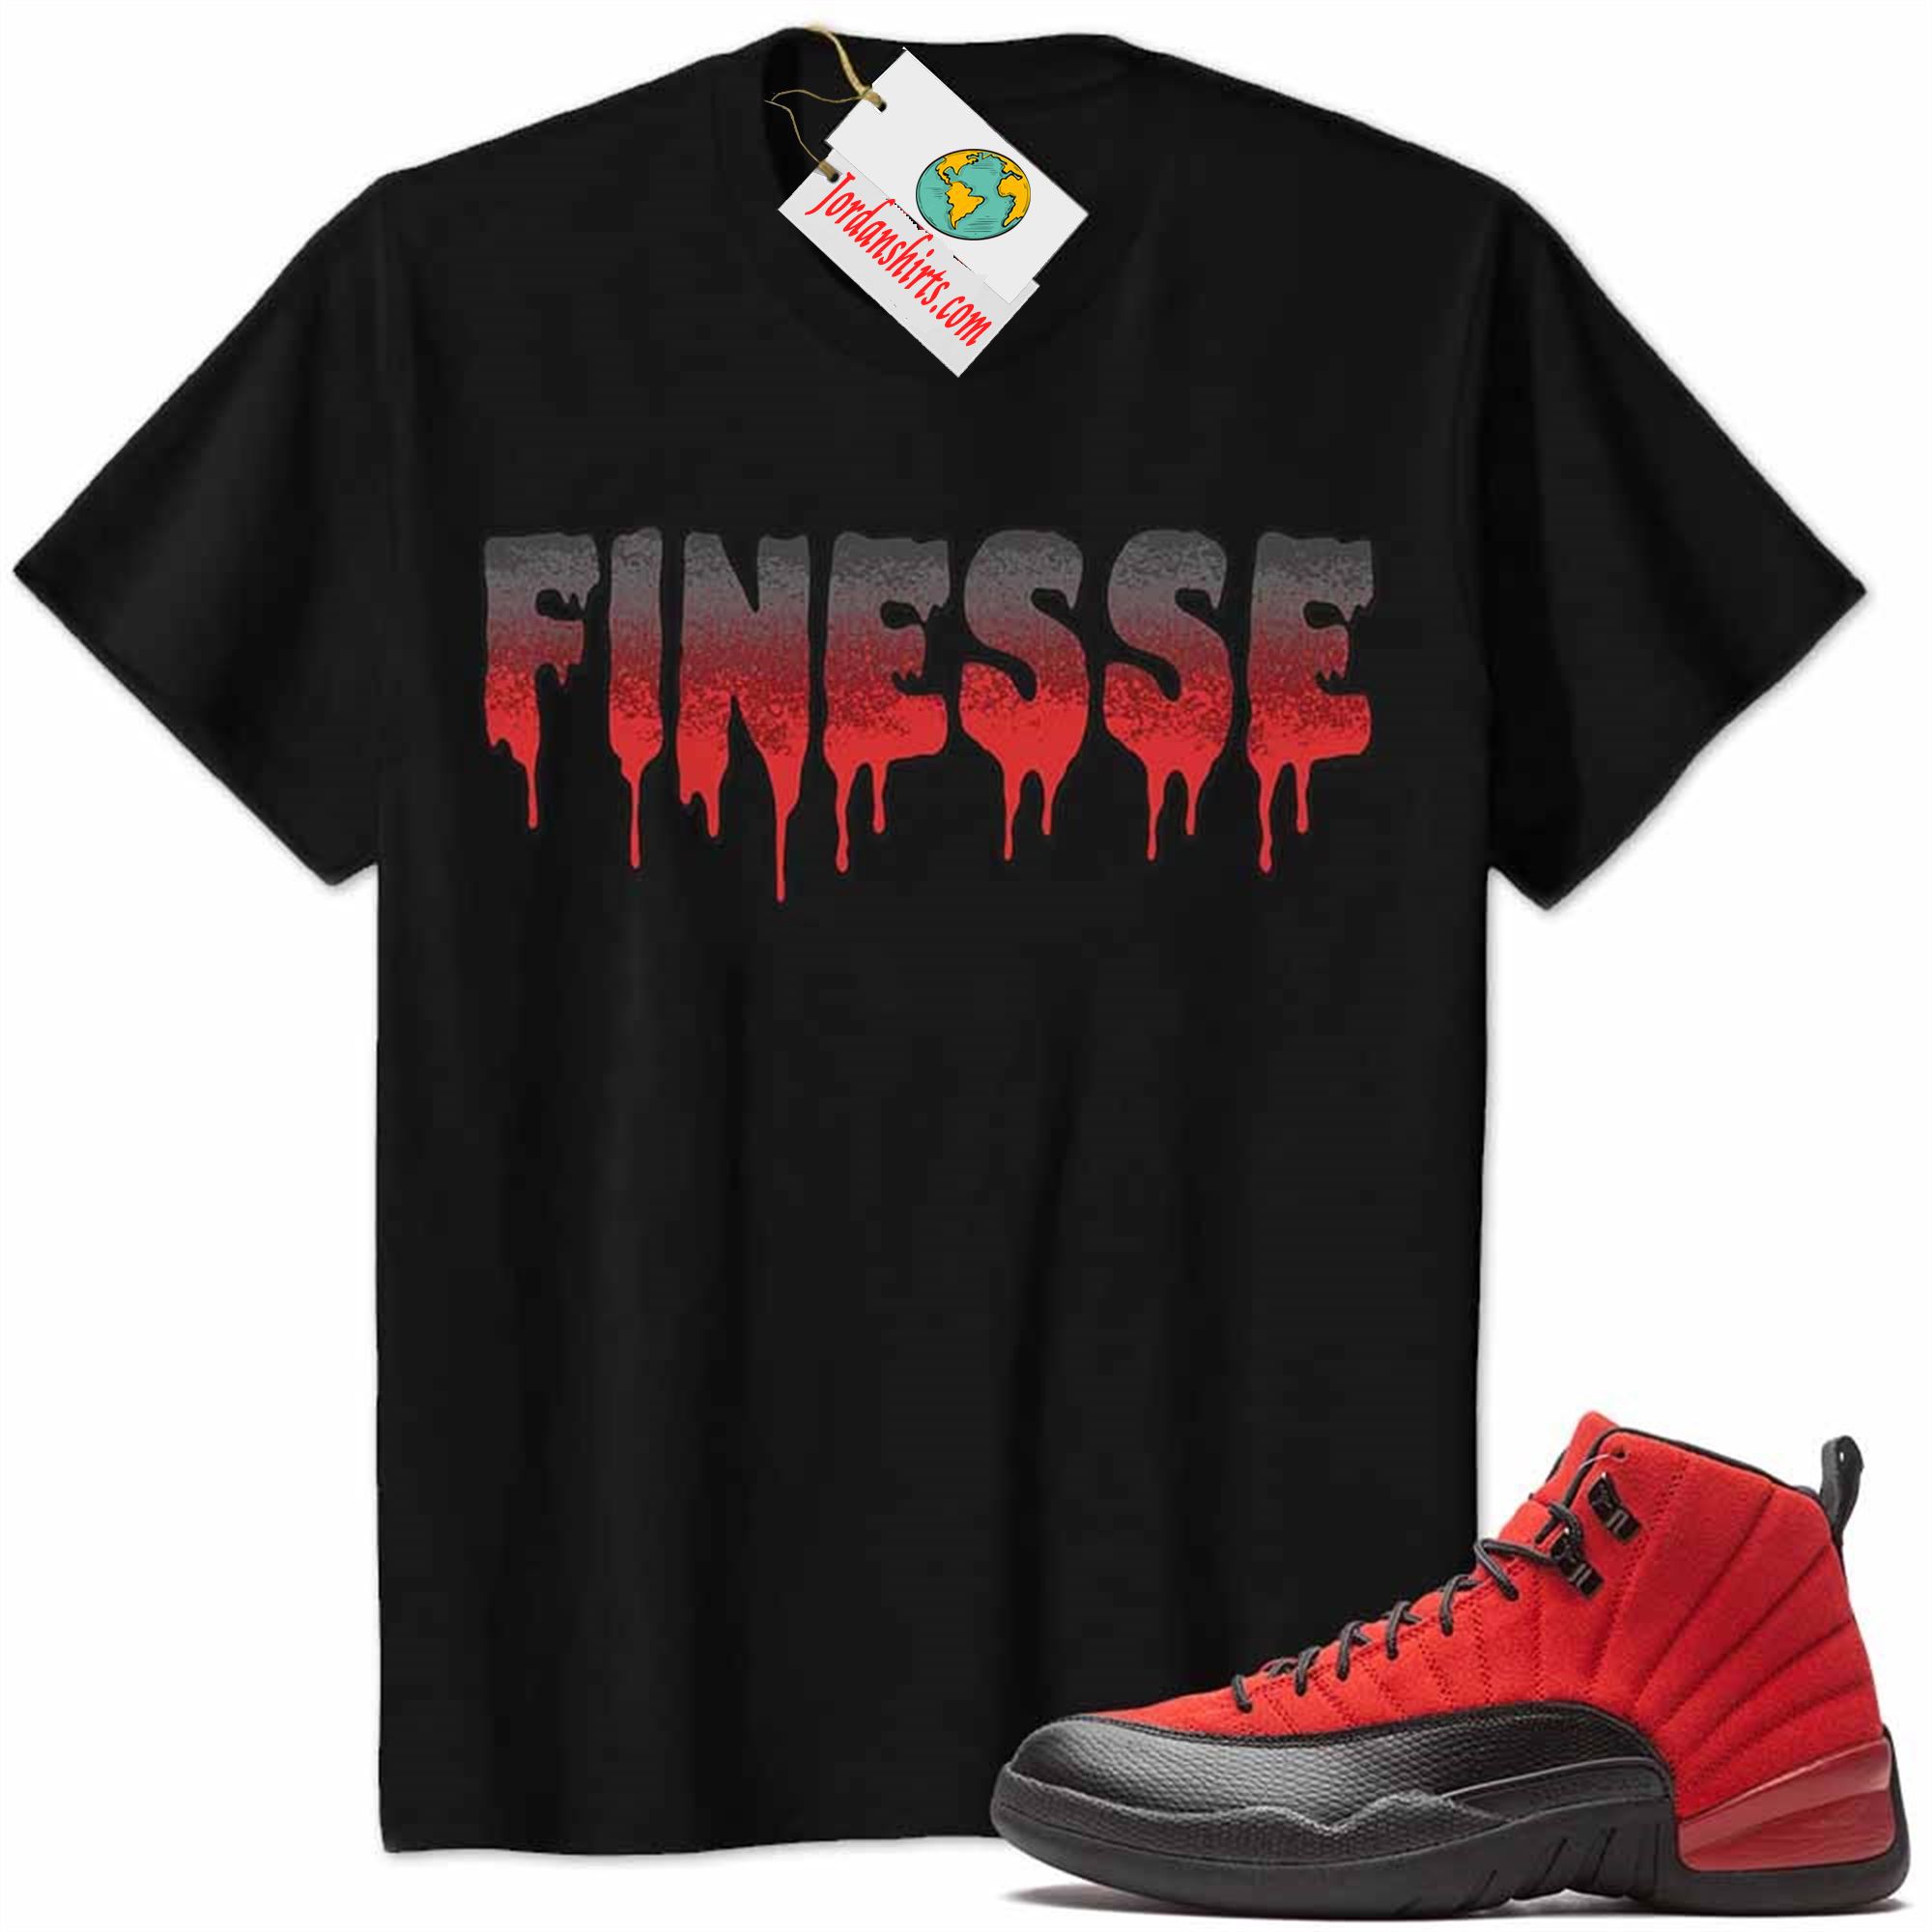 Jordan 12 Shirt, Jordan 12 Reverse Flu Game Shirt Finesse Drip Black Full Size Up To 5xl